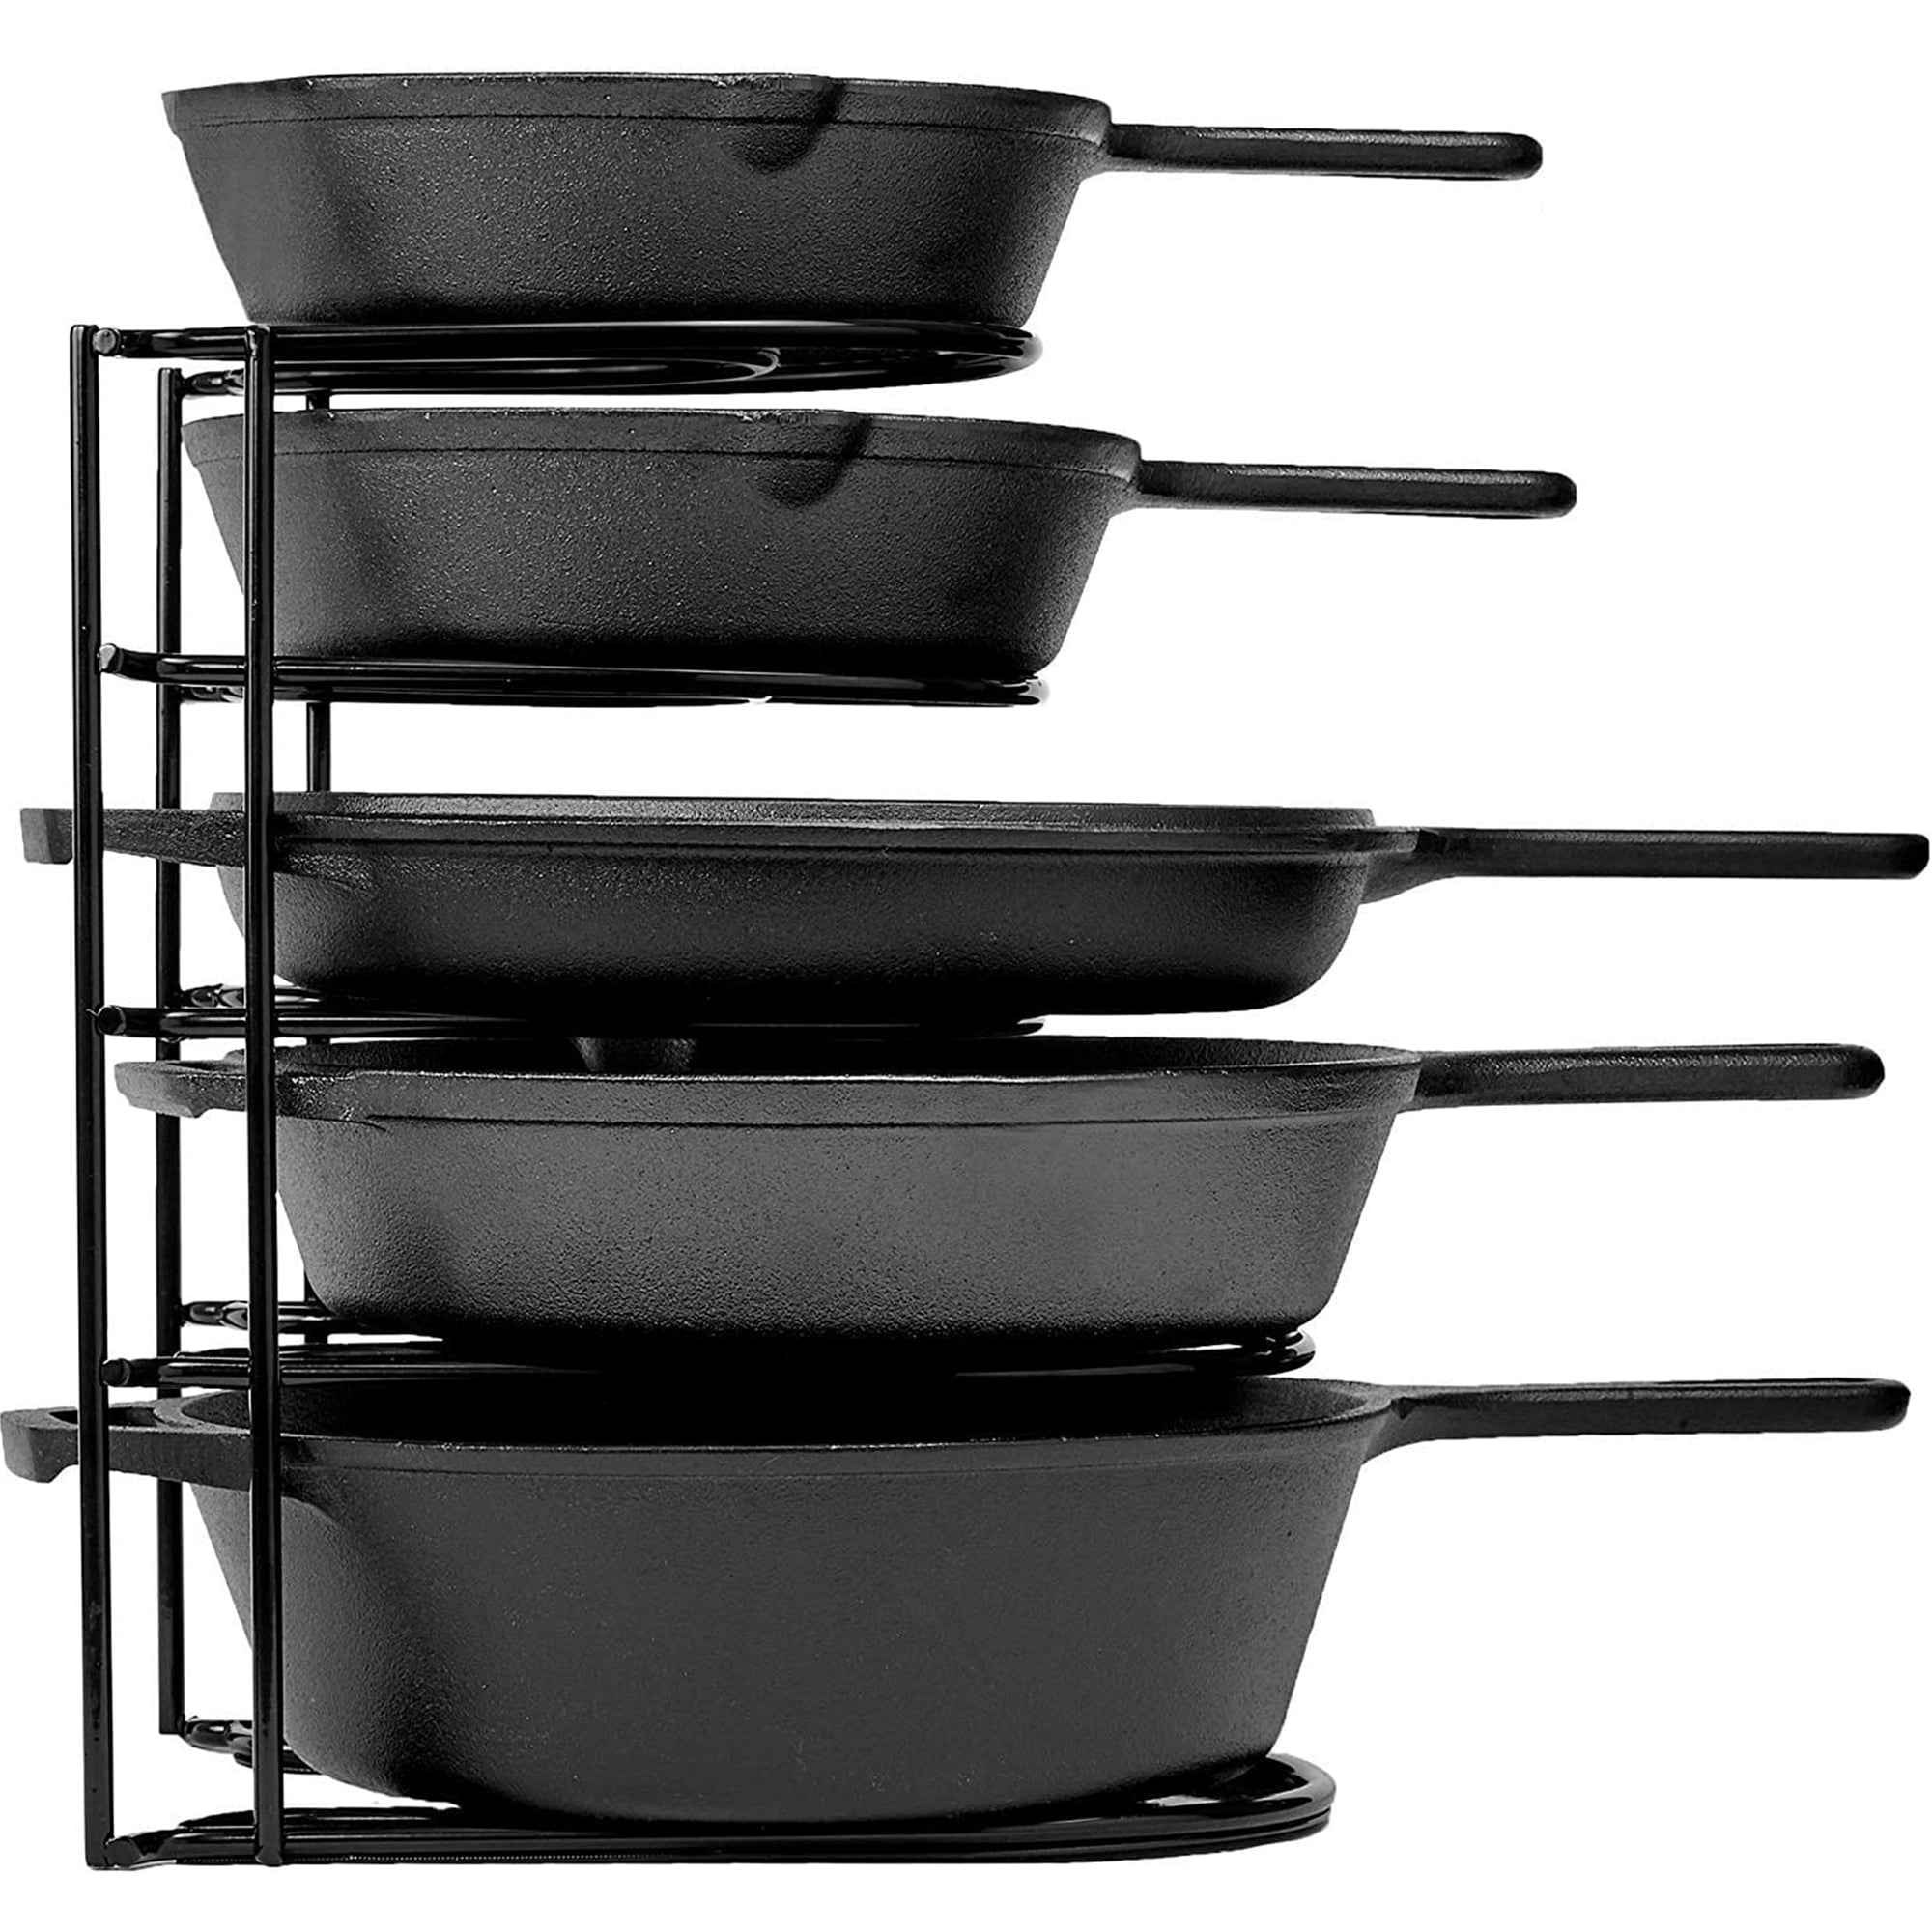  Rubbermaid Pan Organizer, Cookware Rack, Black: Cabinet  Organizers: Home & Kitchen